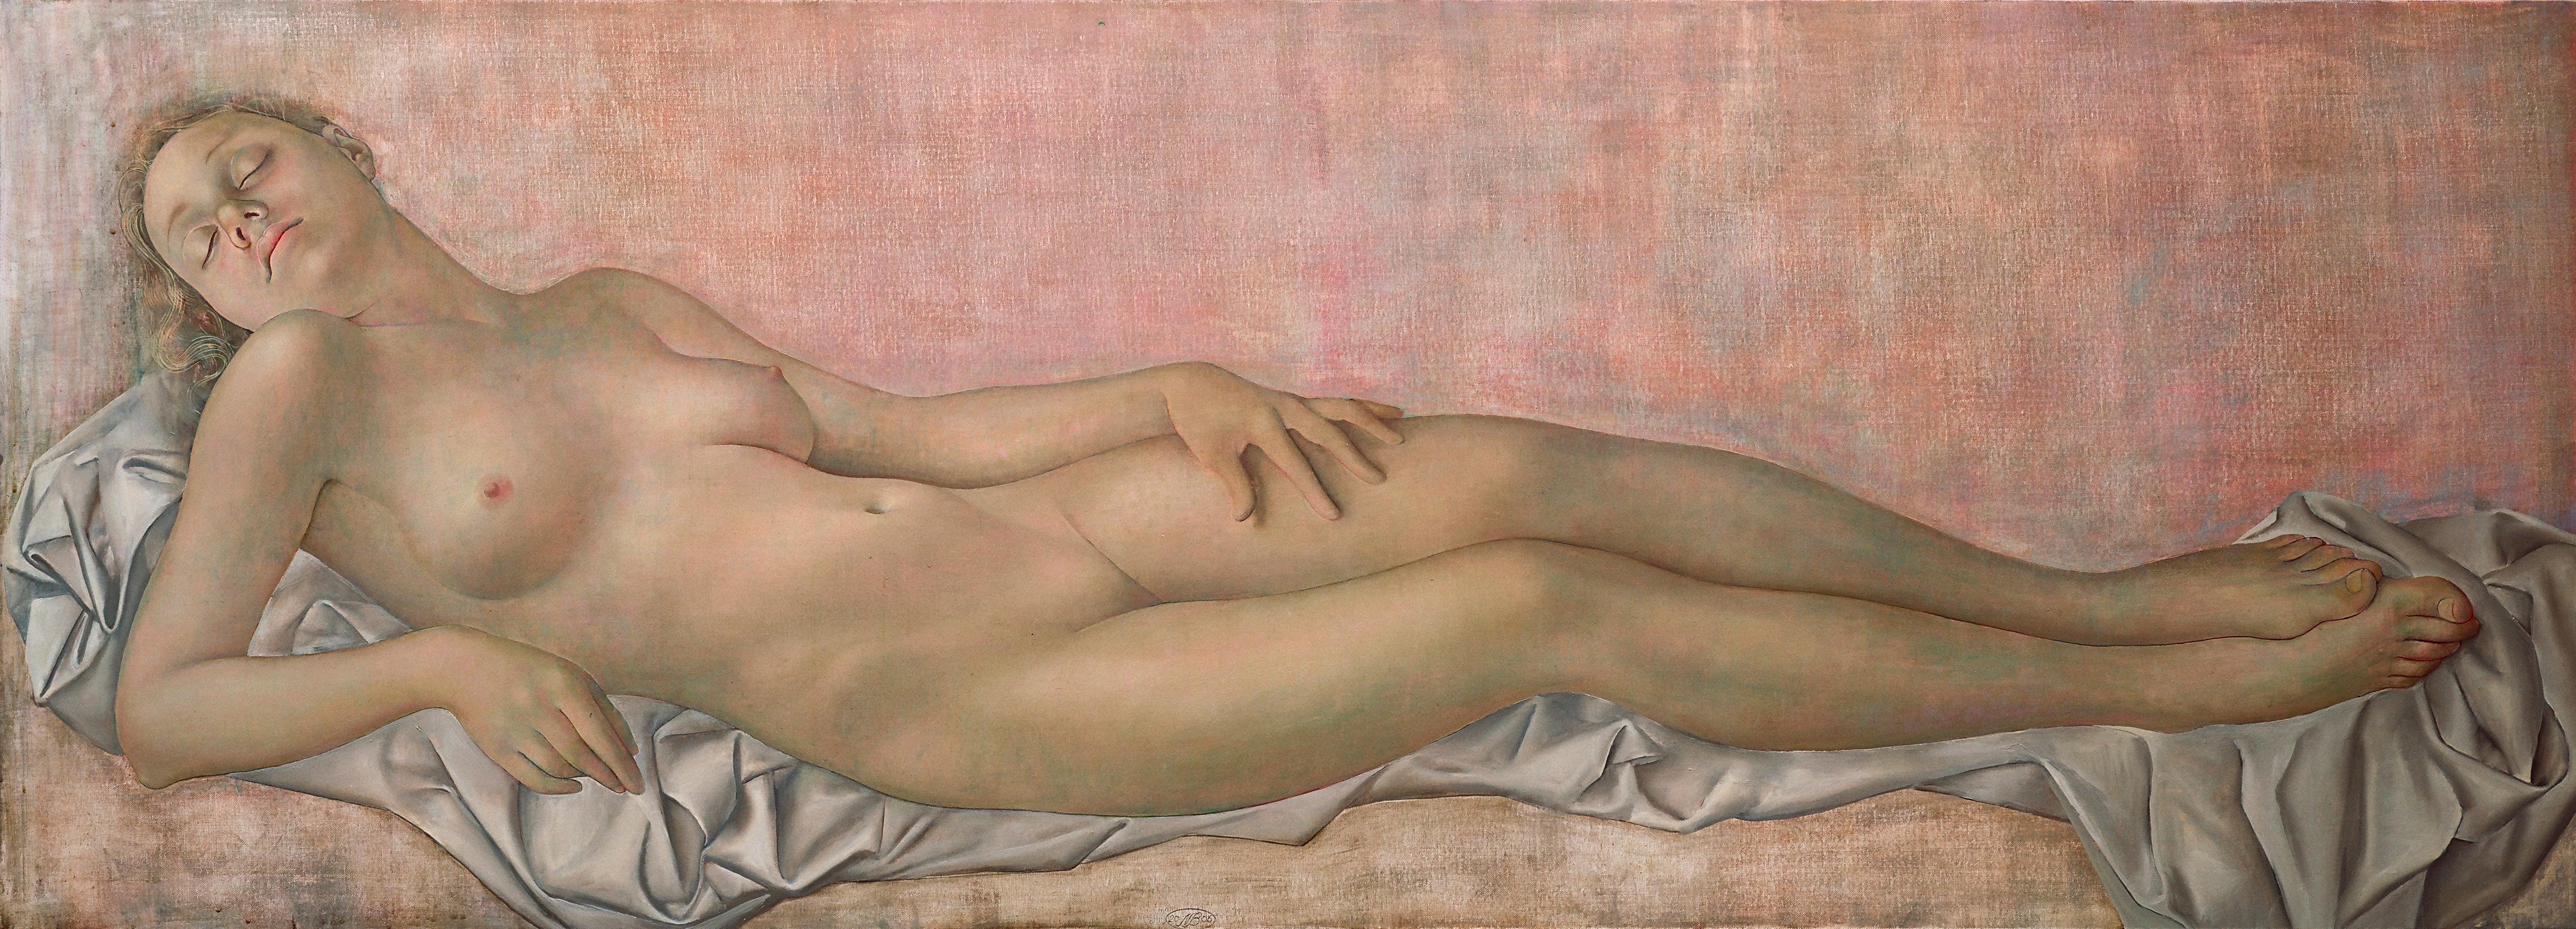 Normunds Braslinsh Figurative Painting - Venus. 2006. Oil on canvas, 66x183 cm